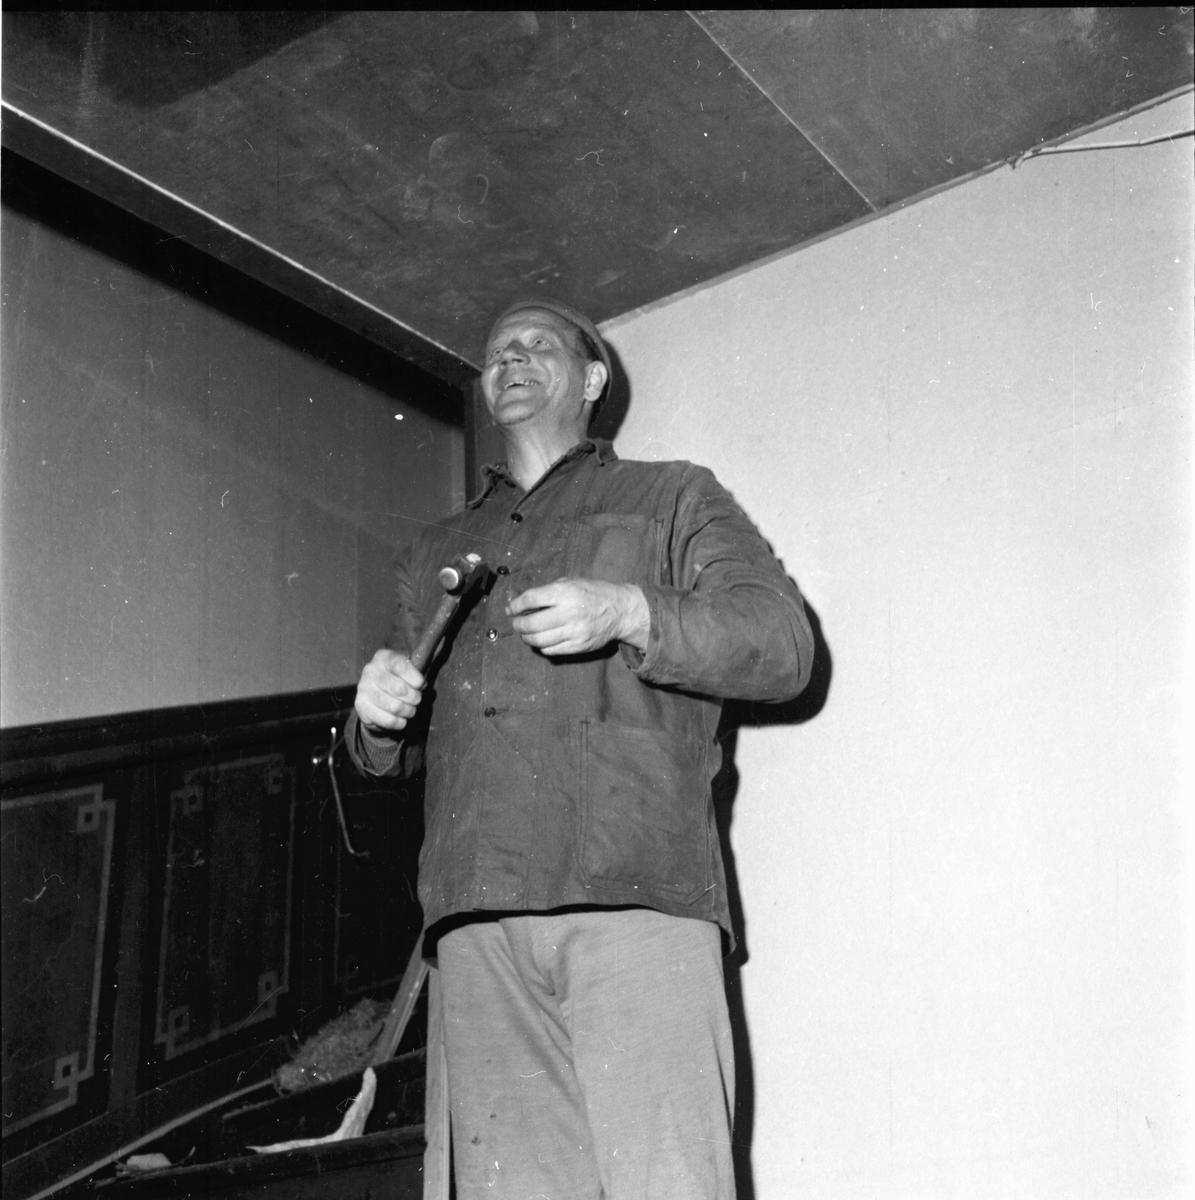 NTO-lokalen repareras.
Vallsta 29/10 1959